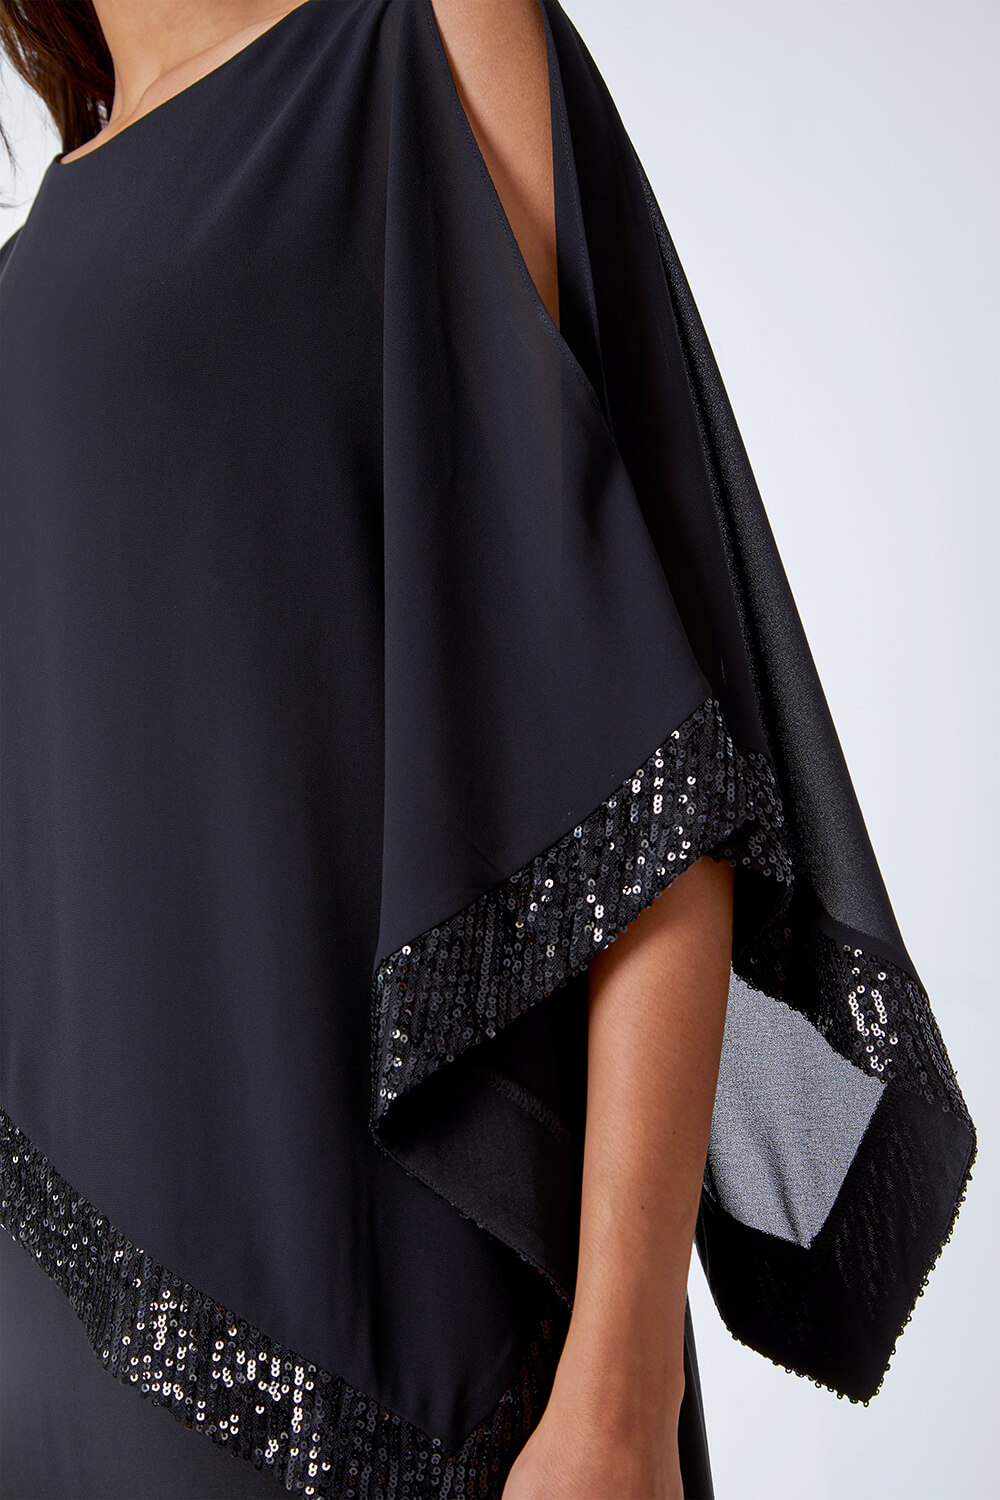 Black Sequin Trim Asymmetric Chiffon Overlay Dress, Image 5 of 5